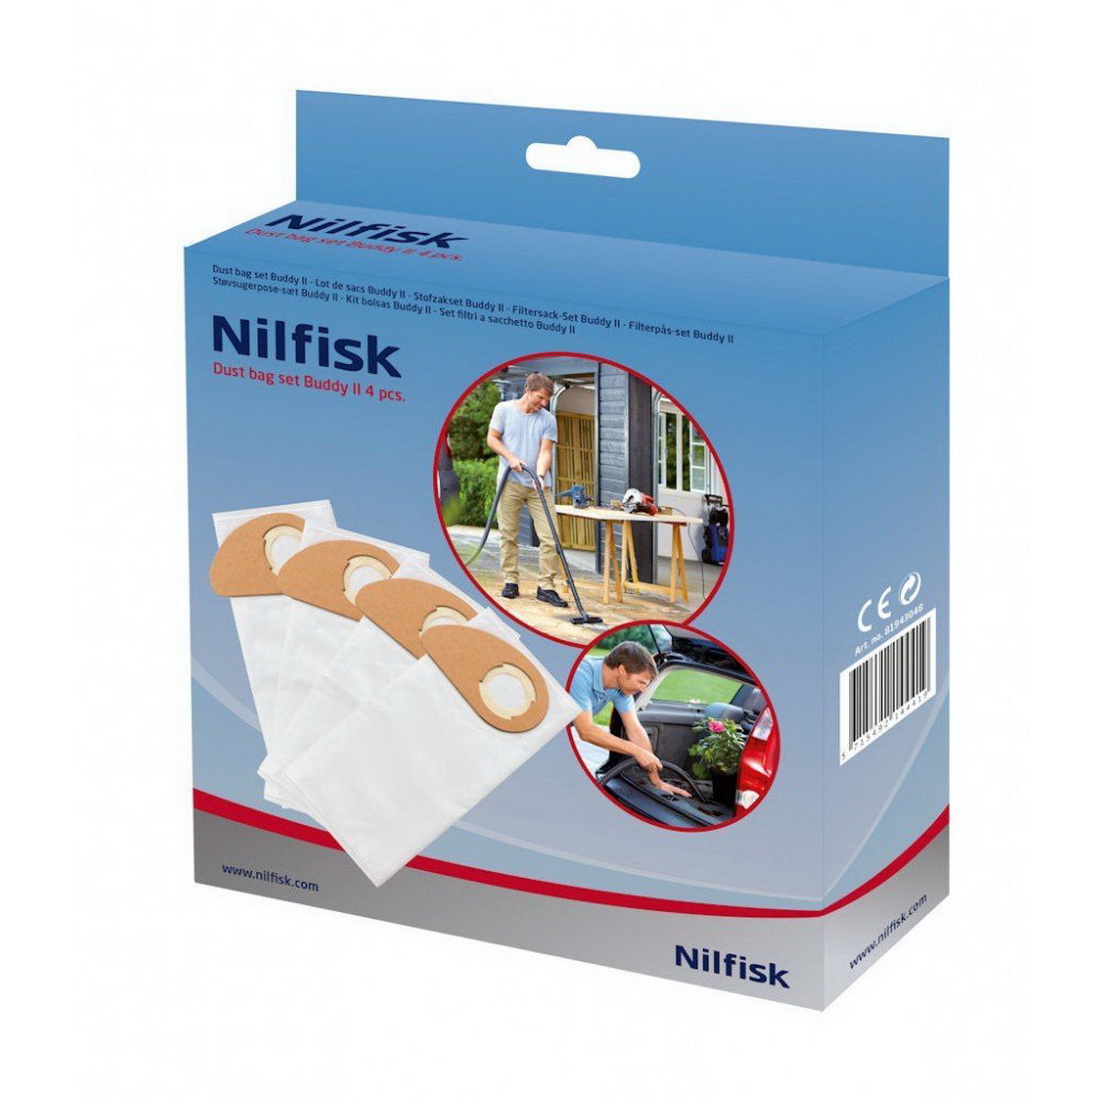 Nilfisk Original 4x 1 Fleece Filter Bags Bag Buddy II Vacuum 8194304 for sale online 